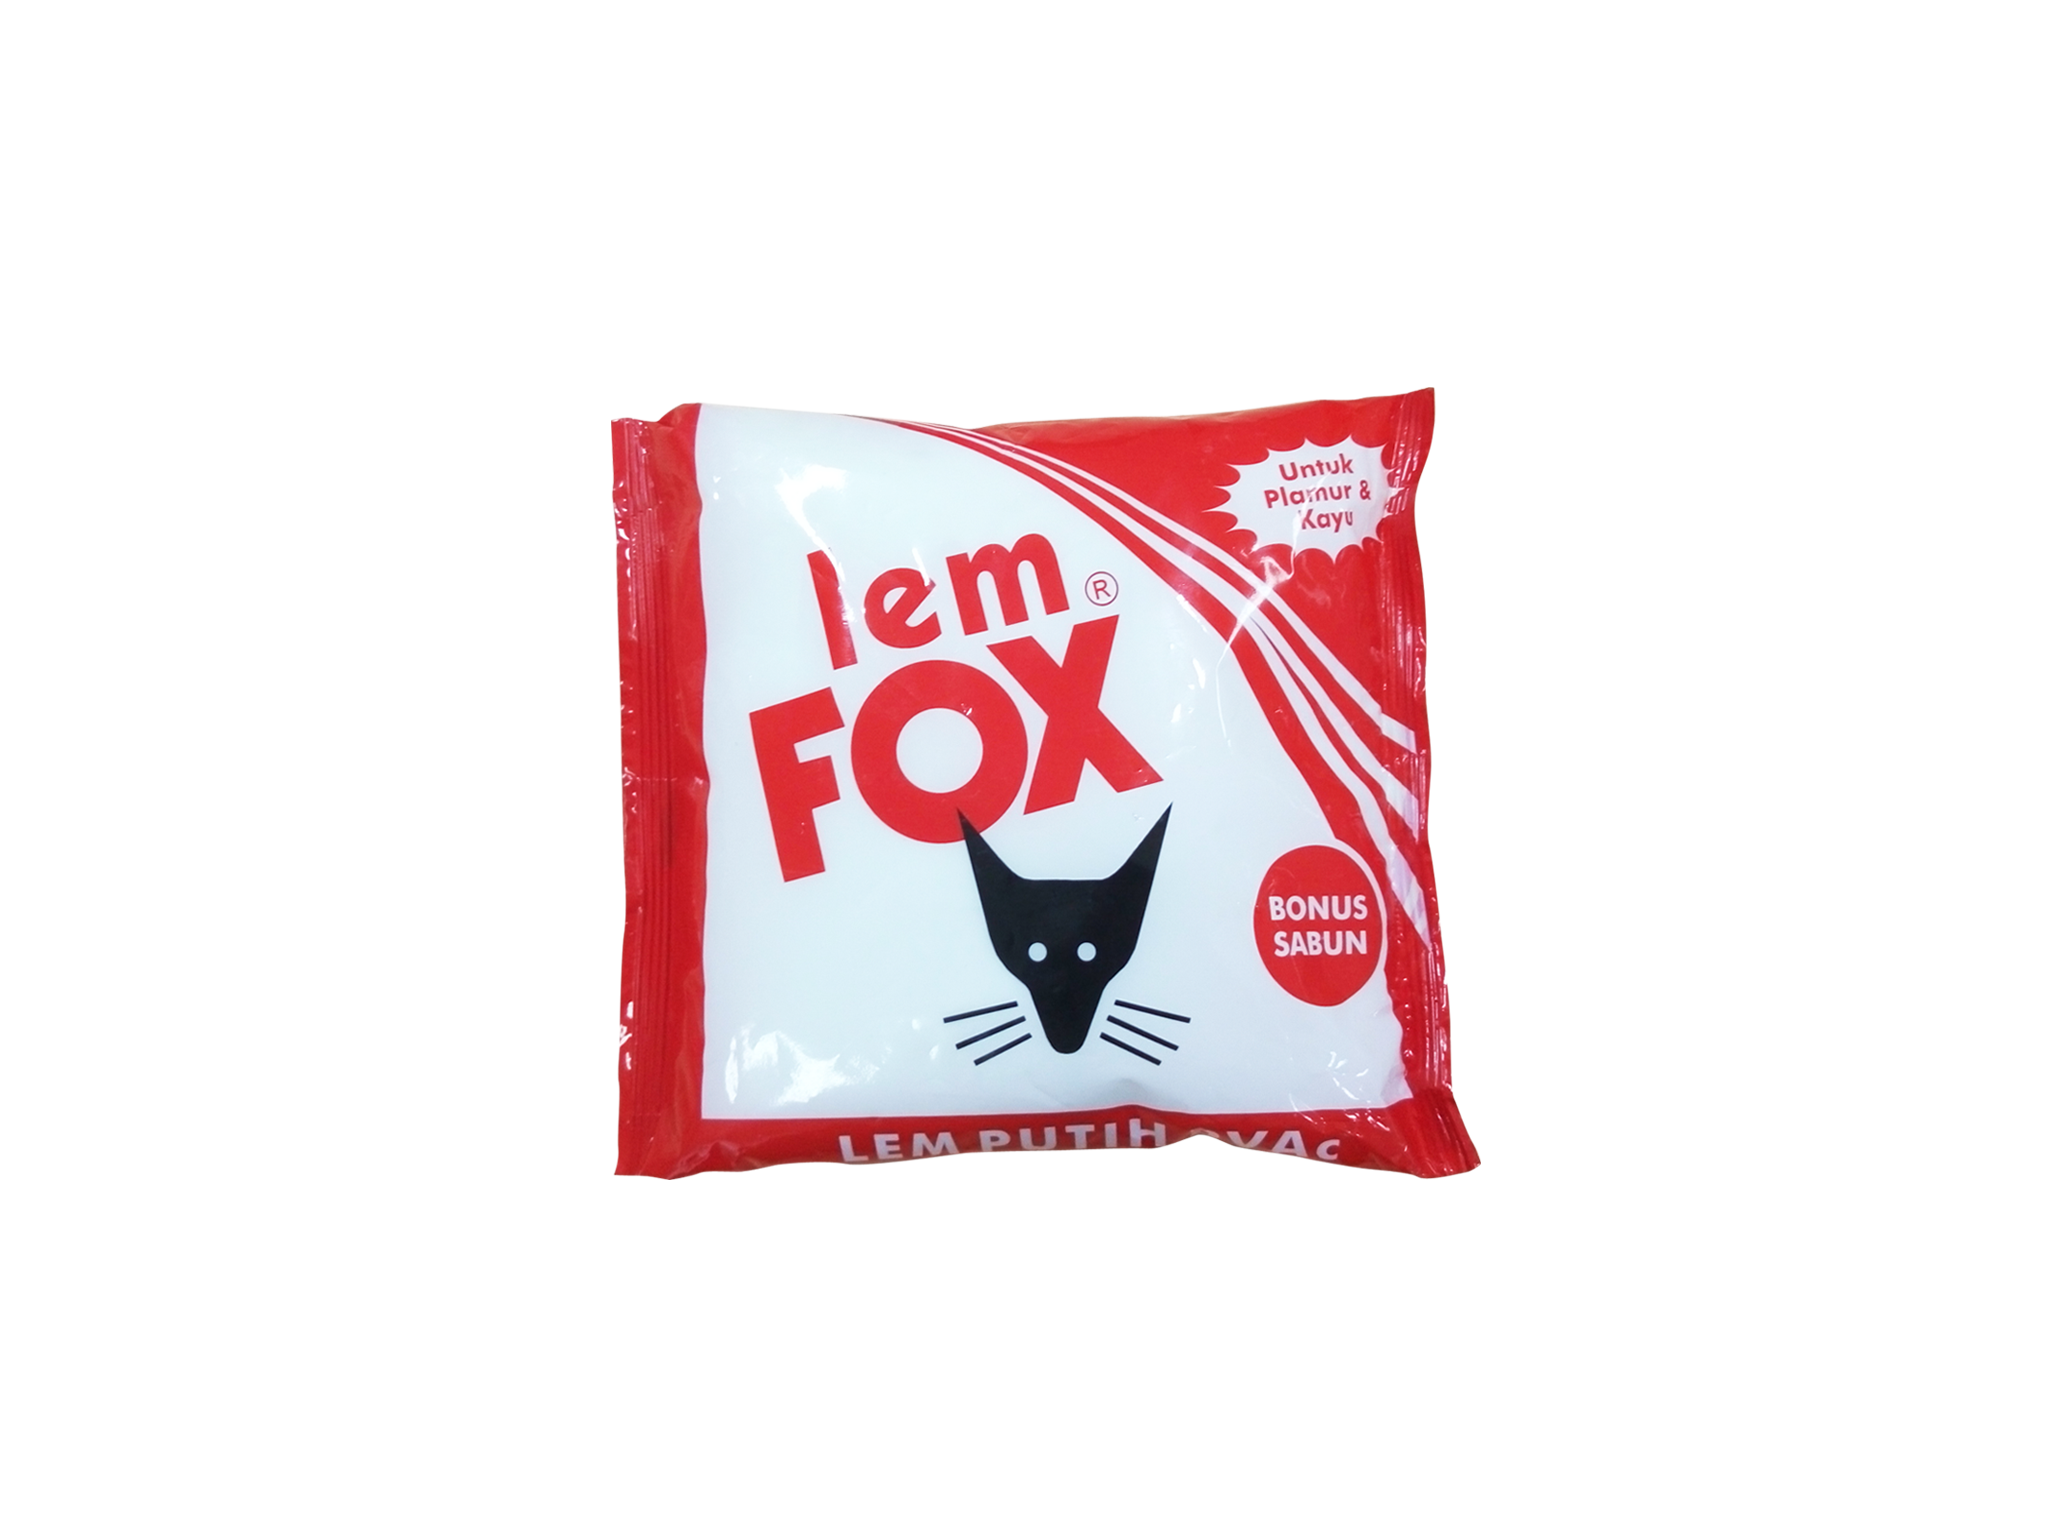 Fox Bun Lem Fox Pesan - Lem Fox , HD Wallpaper & Backgrounds